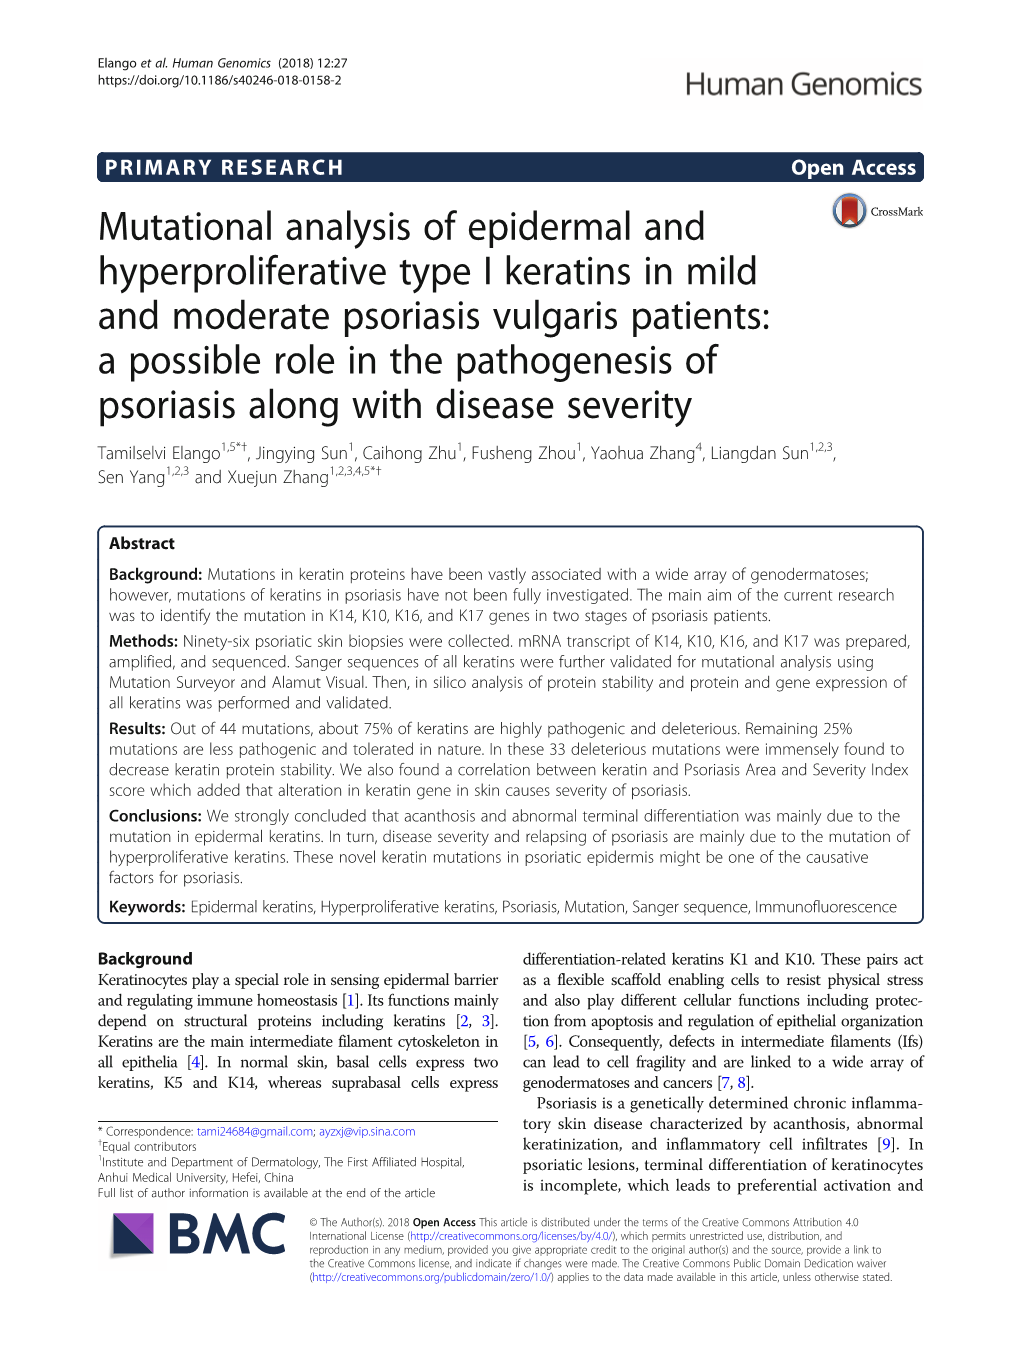 Mutational Analysis of Epidermal and Hyperproliferative Type I Keratins In